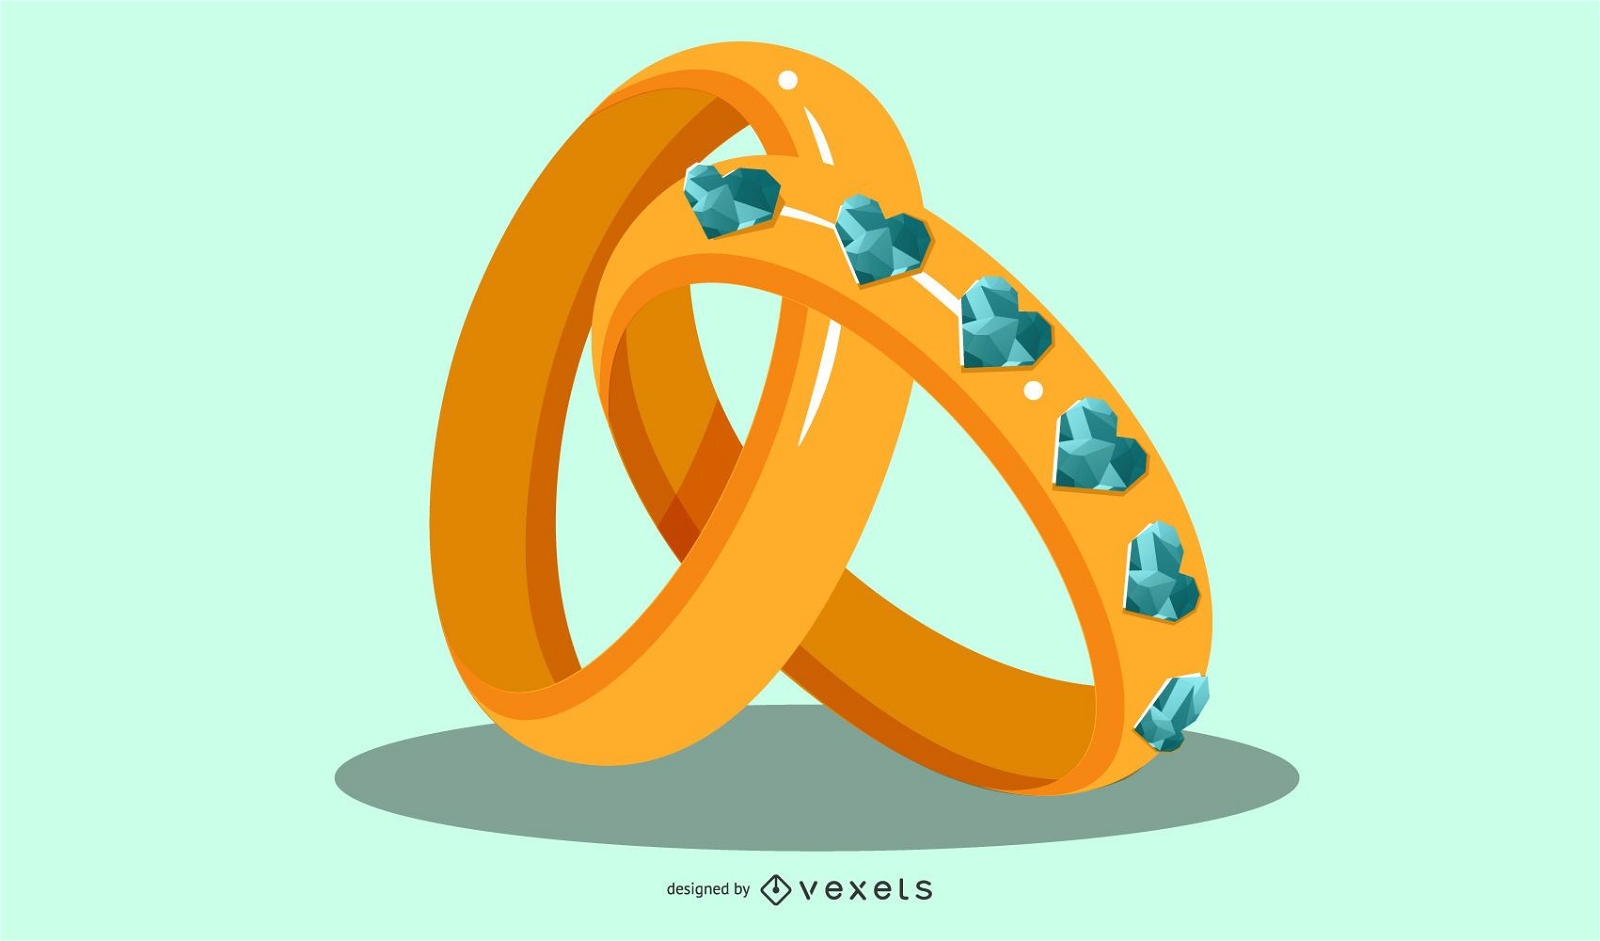 Lindos anéis de casamento de ouro e diamante entrelaçados